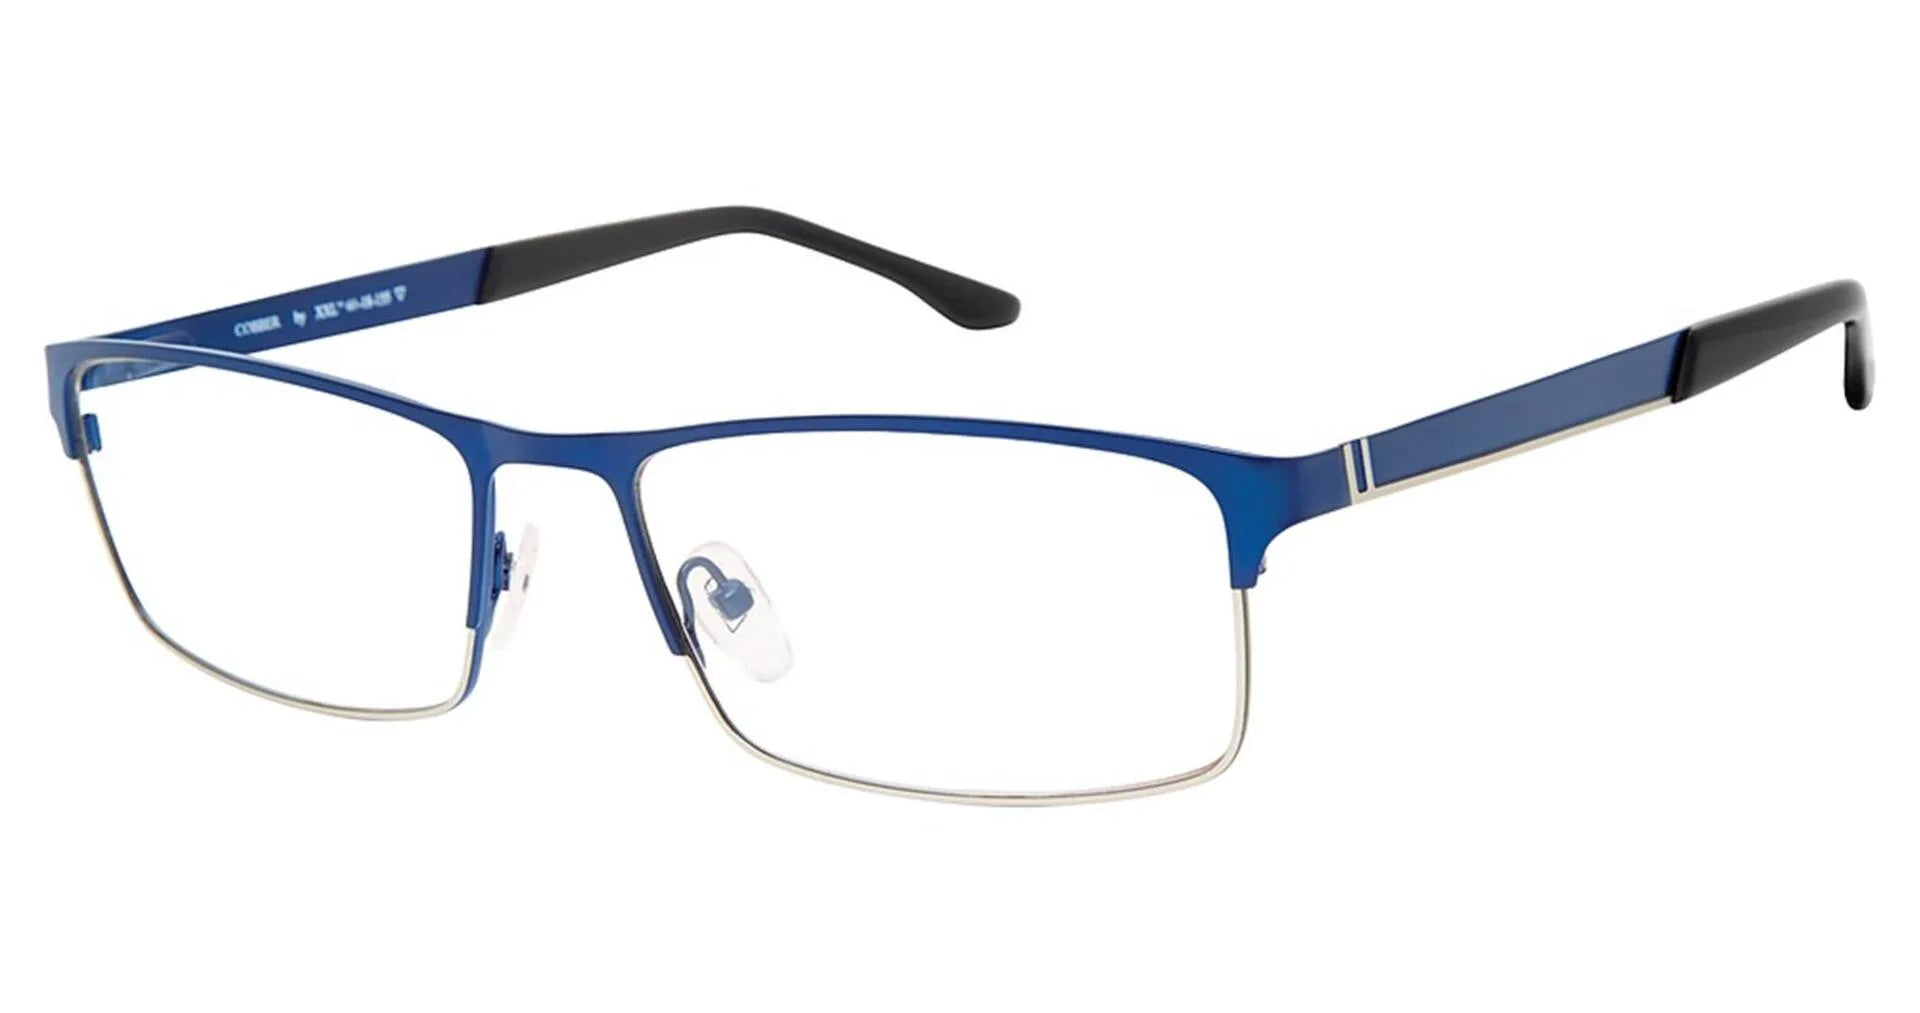 XXL Eyewear Cobber Eyeglasses Navy